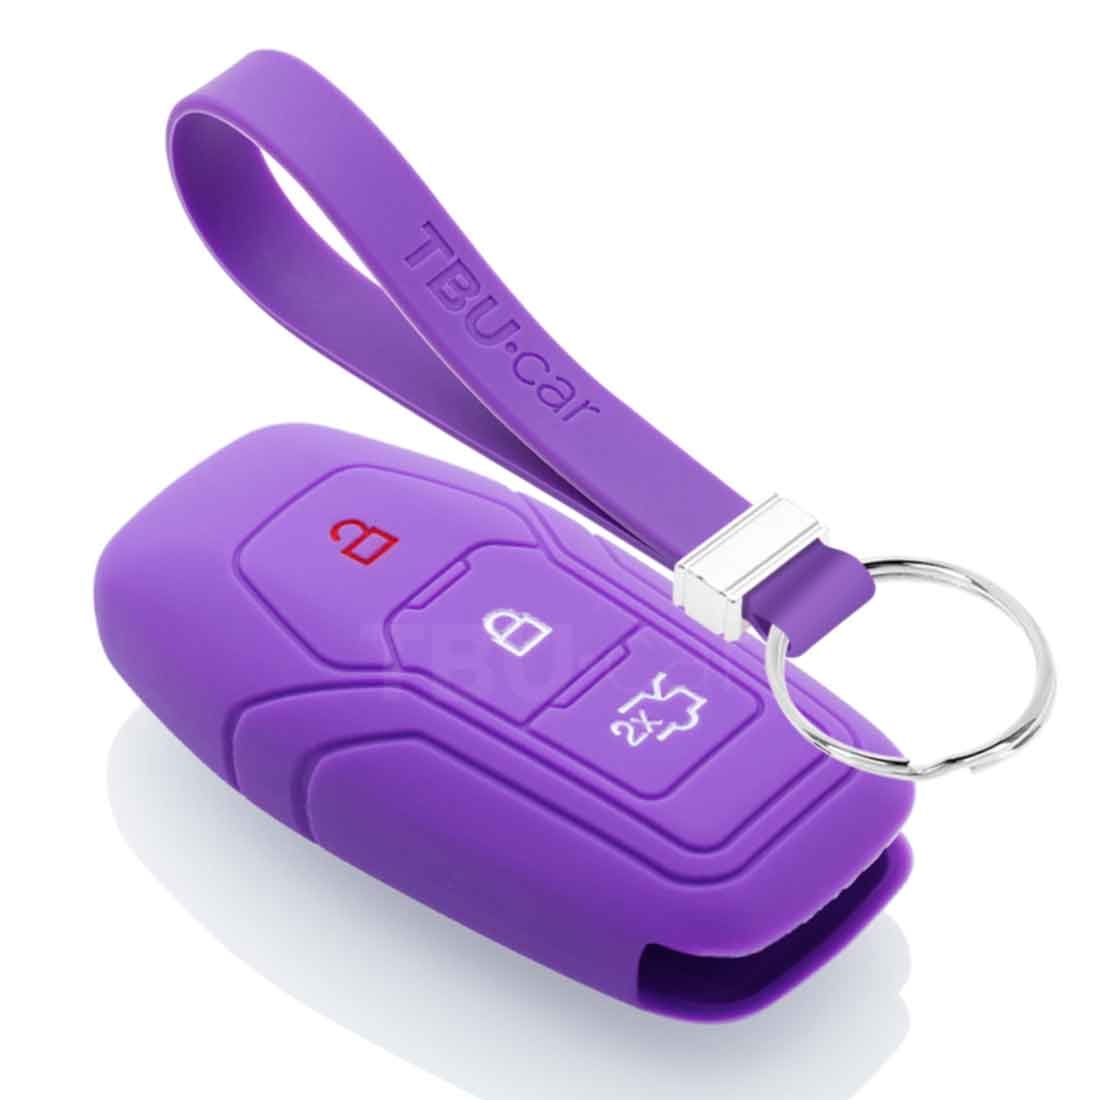 TBU car TBU car Autoschlüssel Hülle kompatibel mit Ford 3 Tasten (Keyless Entry) - Schutzhülle aus Silikon - Auto Schlüsselhülle Cover in Violett